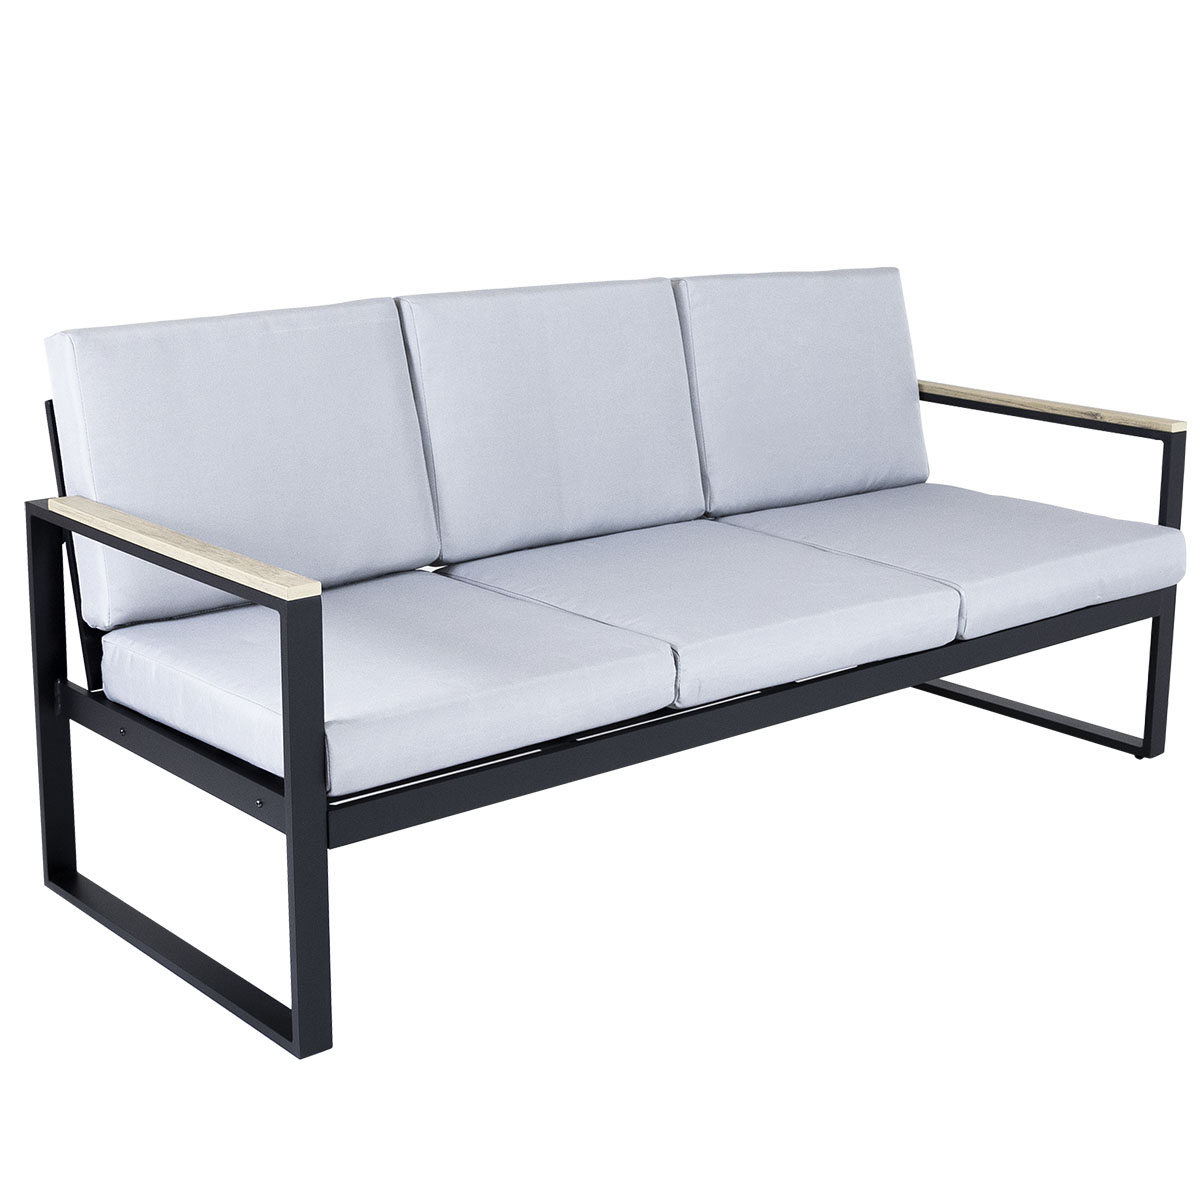 Charles Bentley Polywood And Extrusion Aluminium Large 3 Seater Sofa